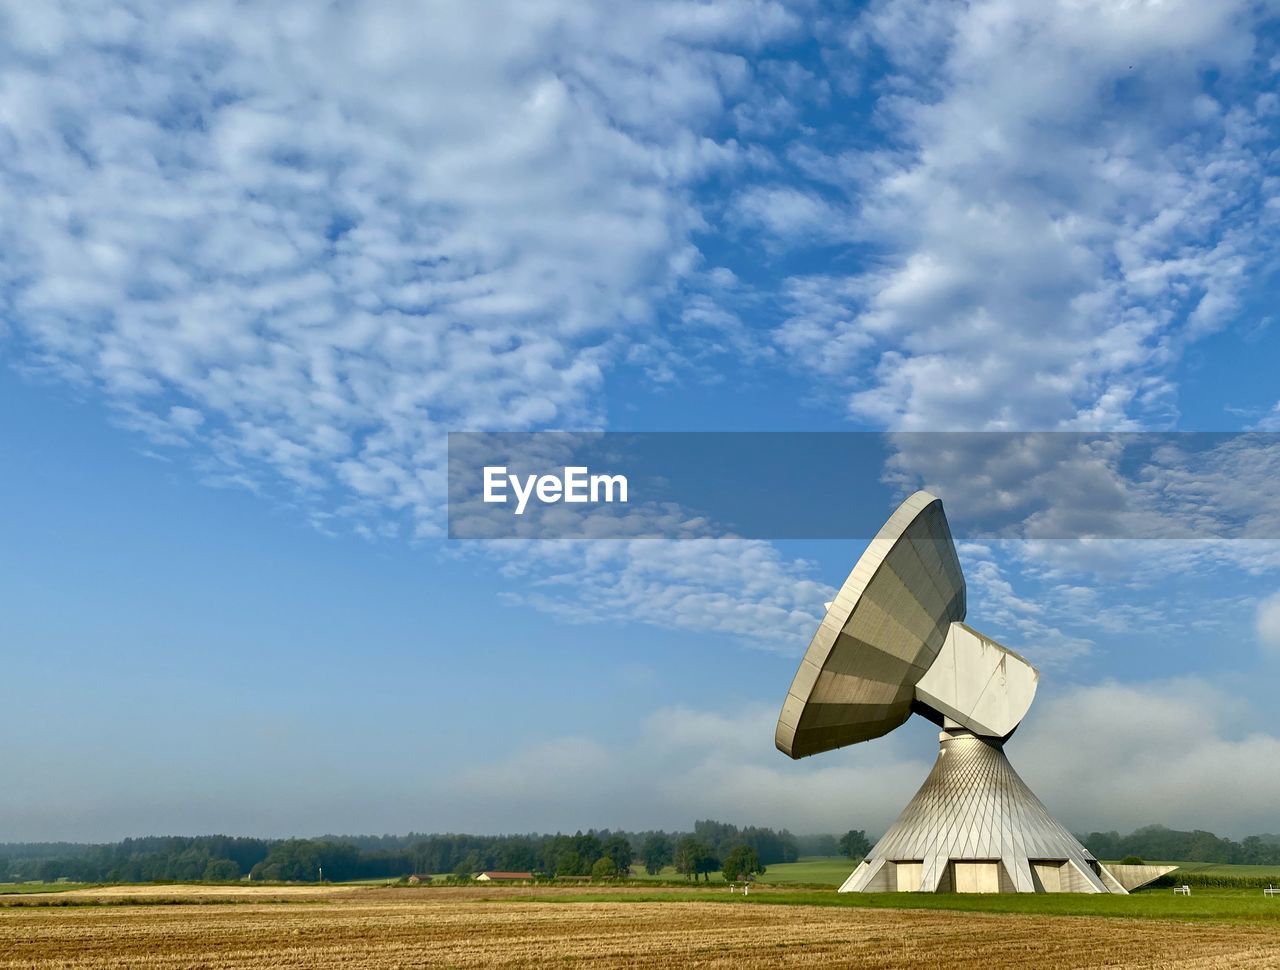 Radio teleskope sending its message to the sky